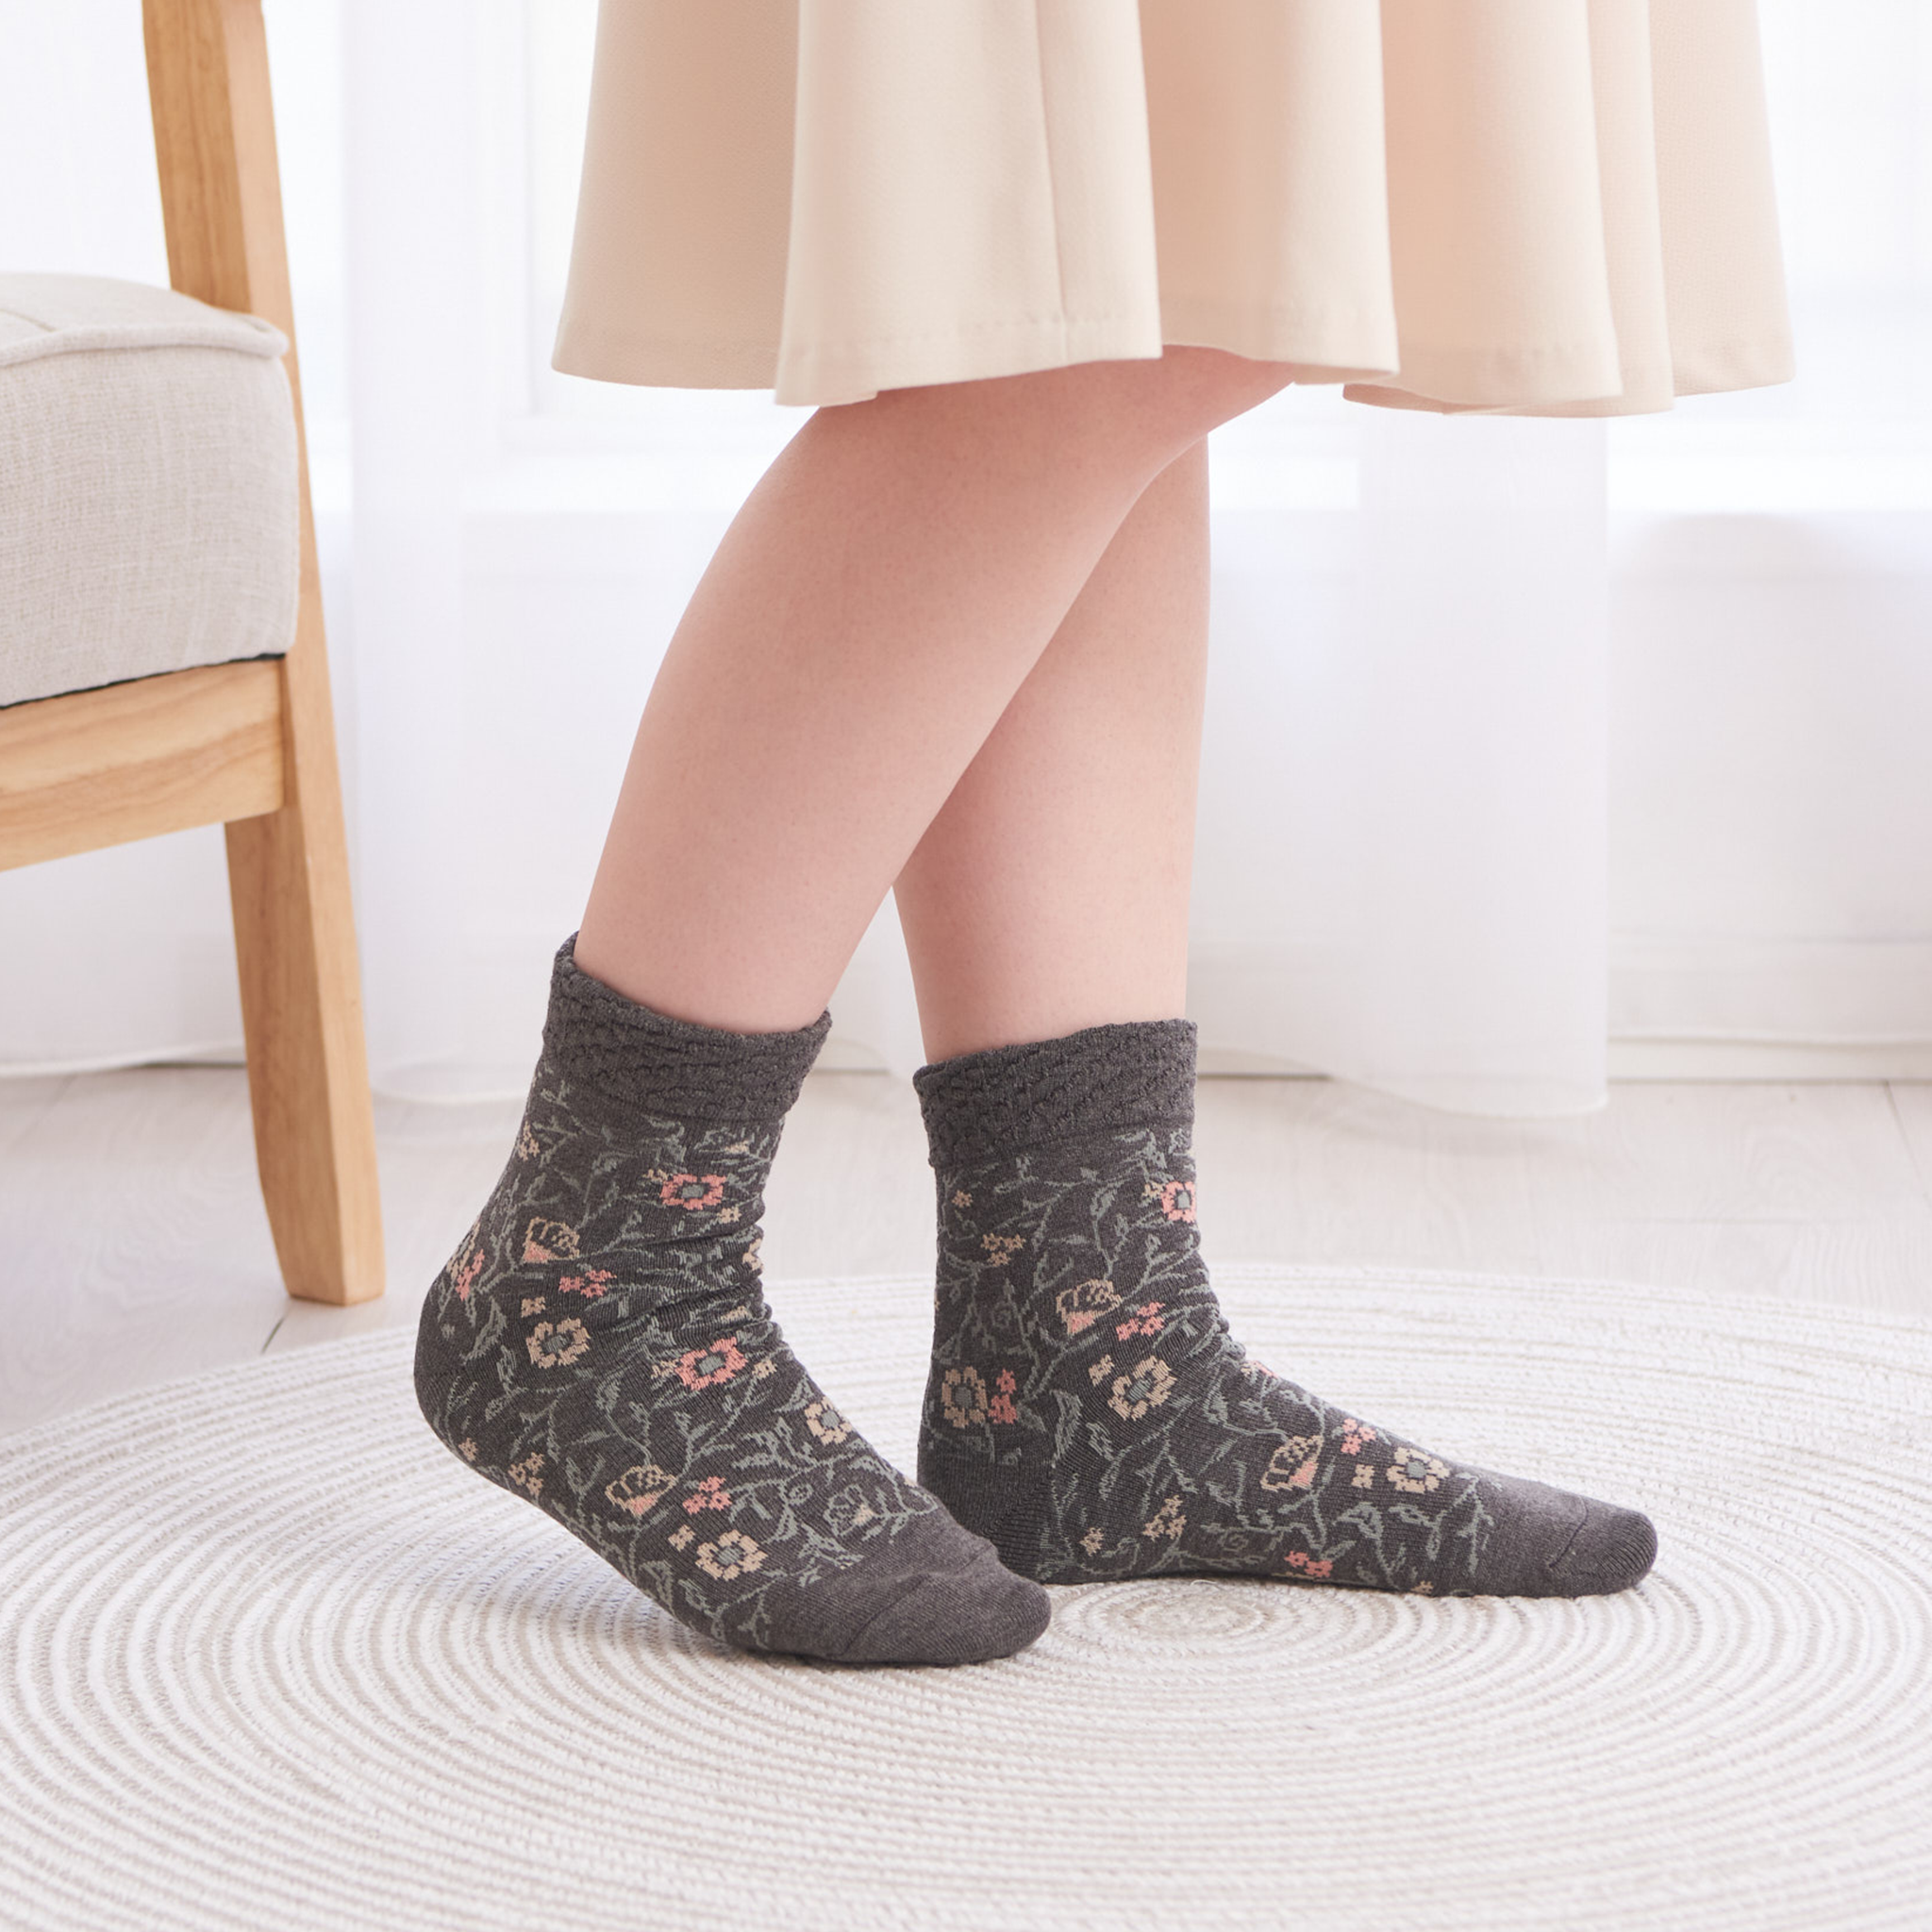 Smooth-heel socks double-layer wool blend [Garden] - 661